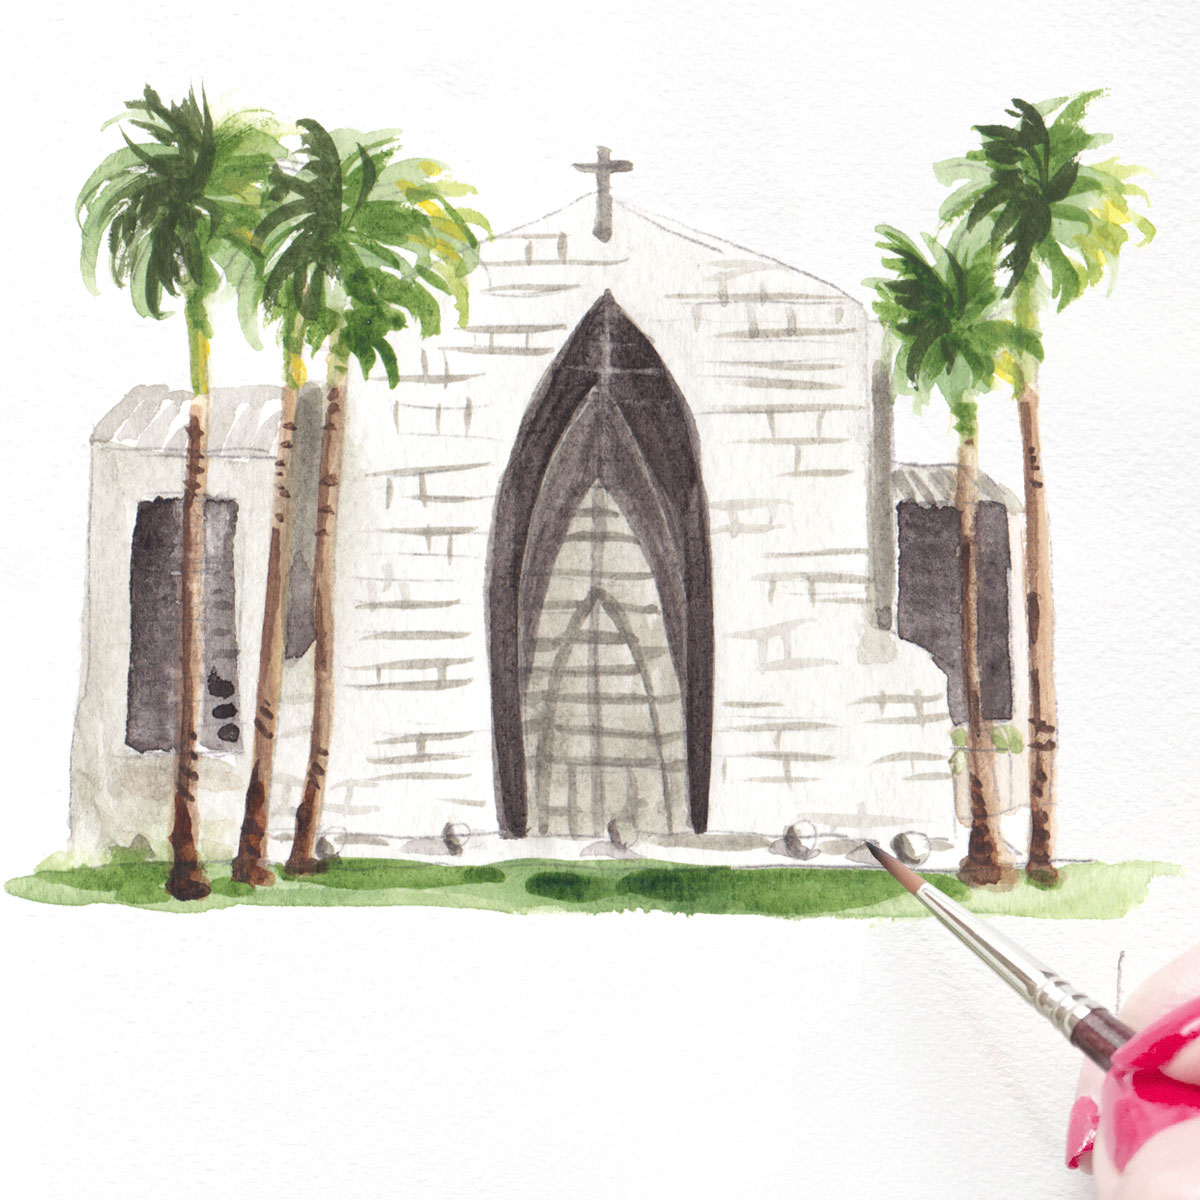 Watercolor Epiphany Church in Miami Florida wedding venue illustration by artist Michelle Mospens. - MospensStudio.com